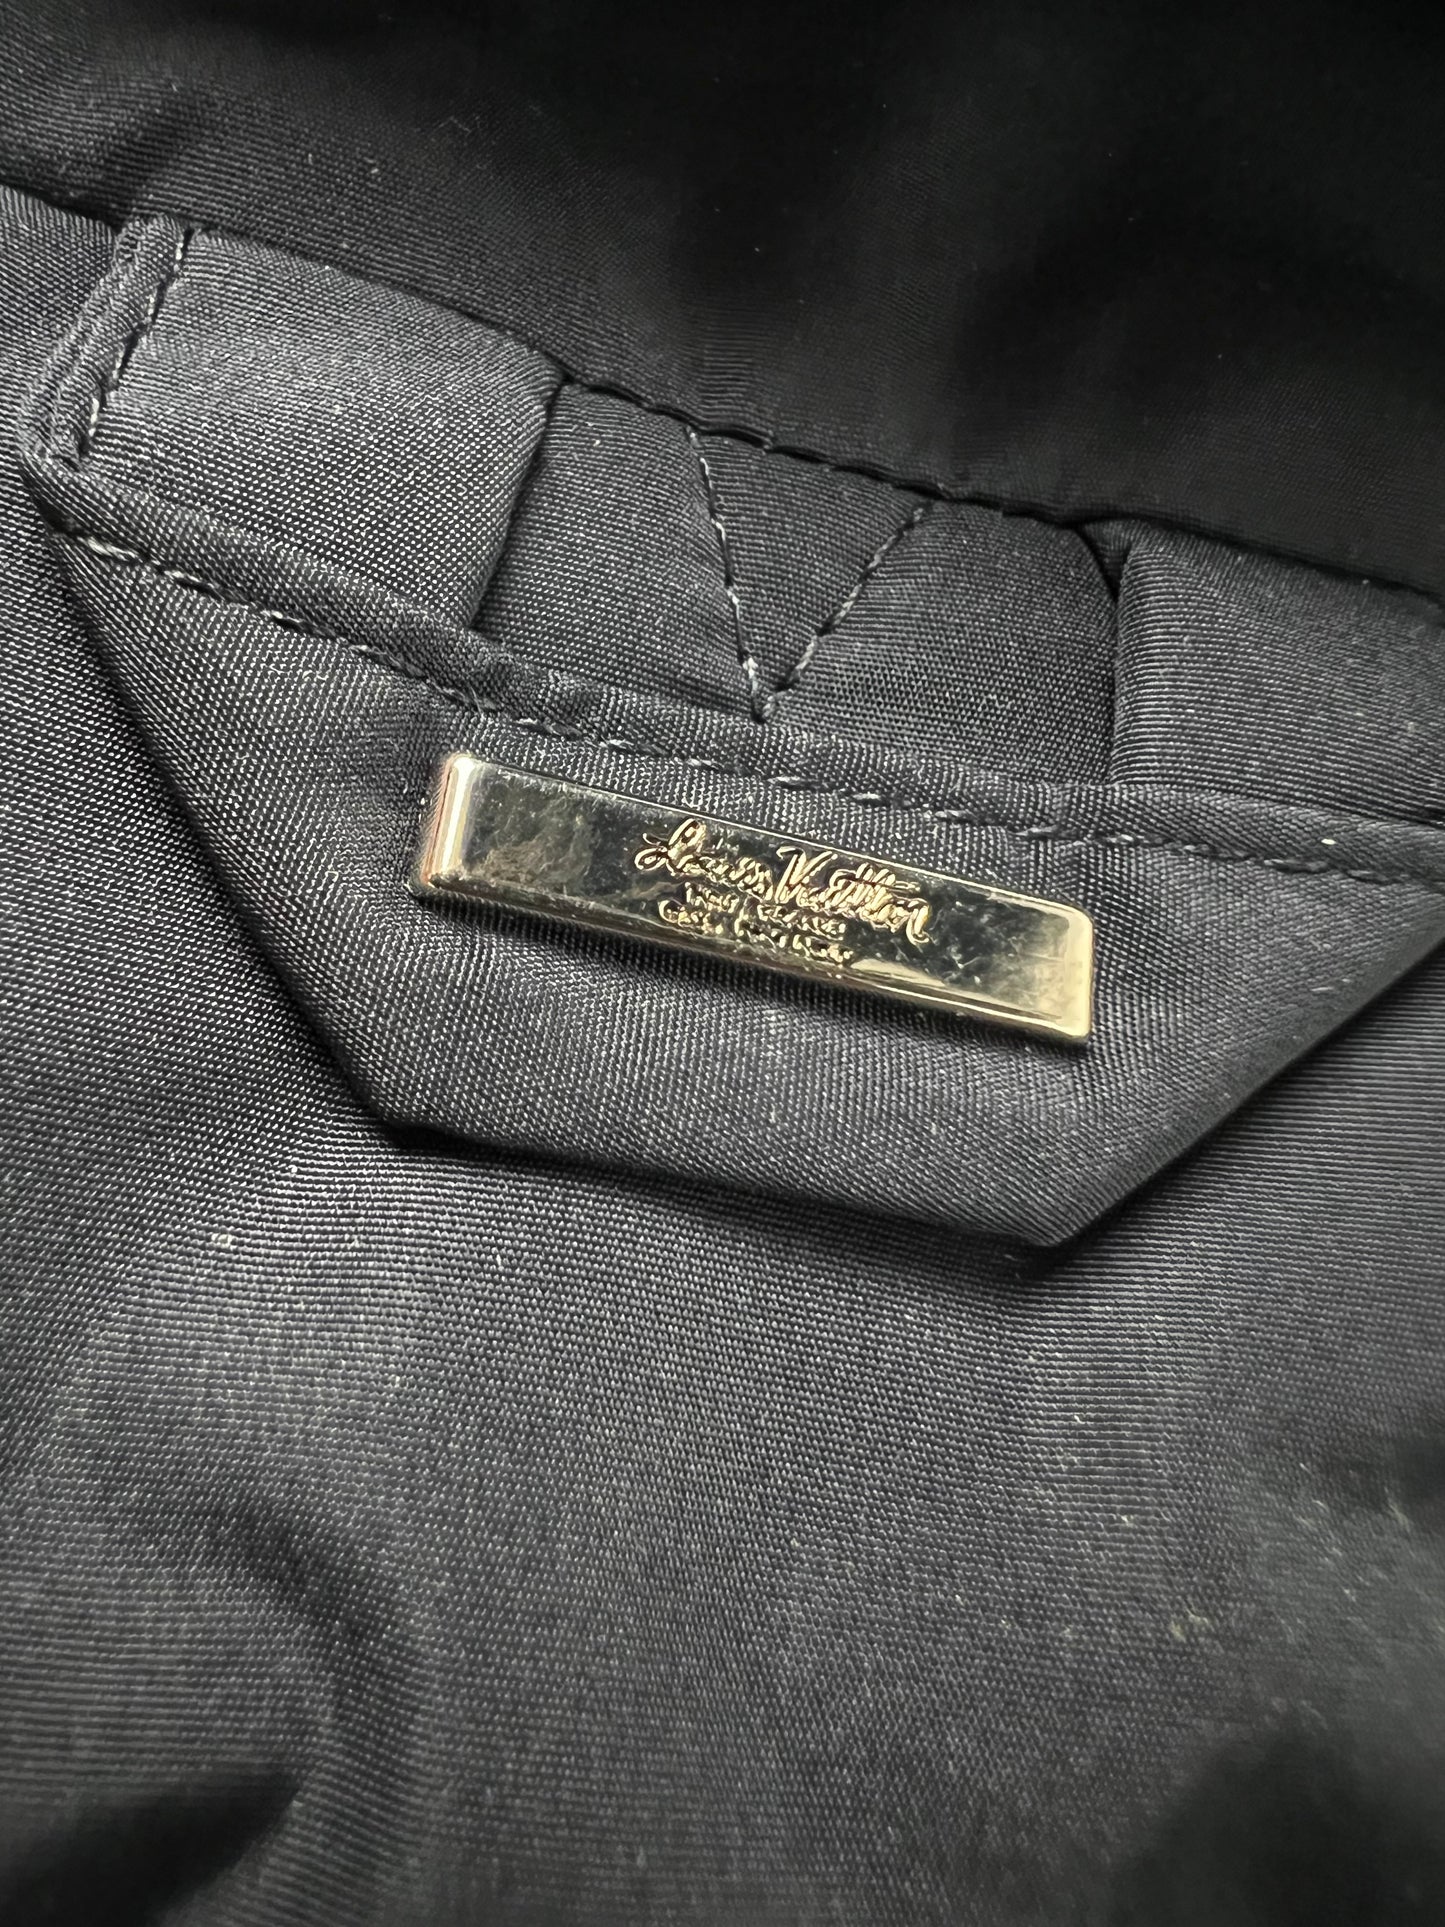 Louis Vuitton AW19 padded monogram jacket in dark navy SZ:48